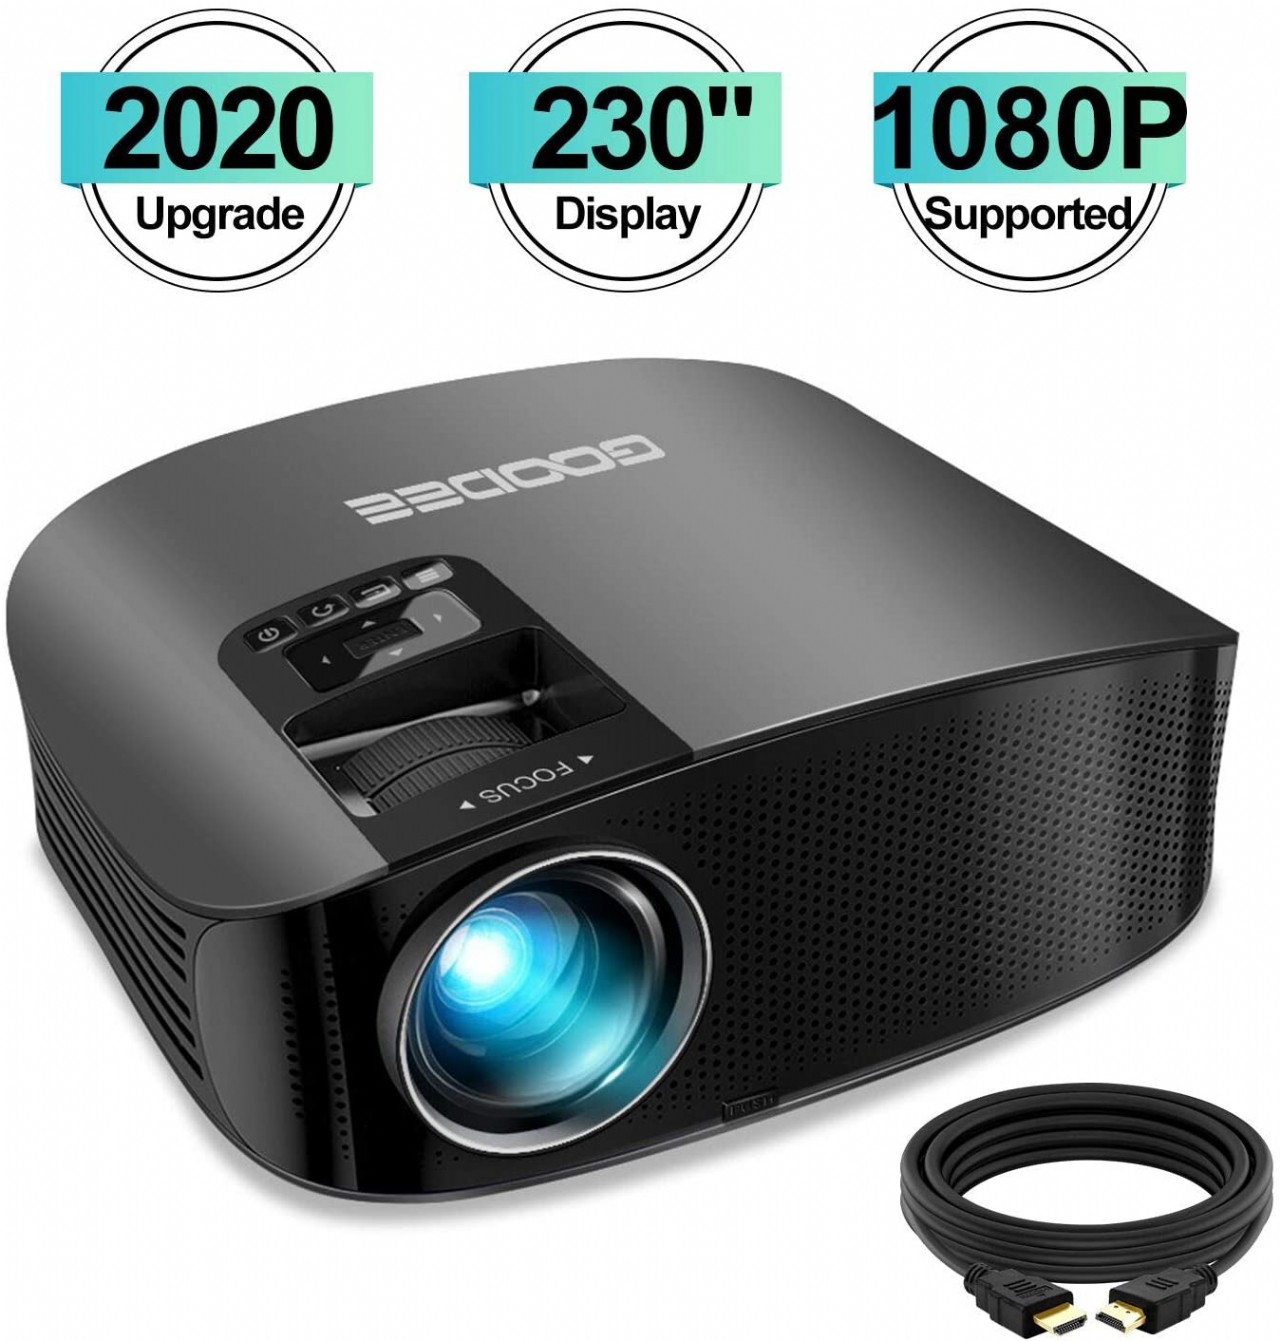 Projector, GooDee 2020 Upgrade HD Video Projector Outdoor Movie Projector, 230